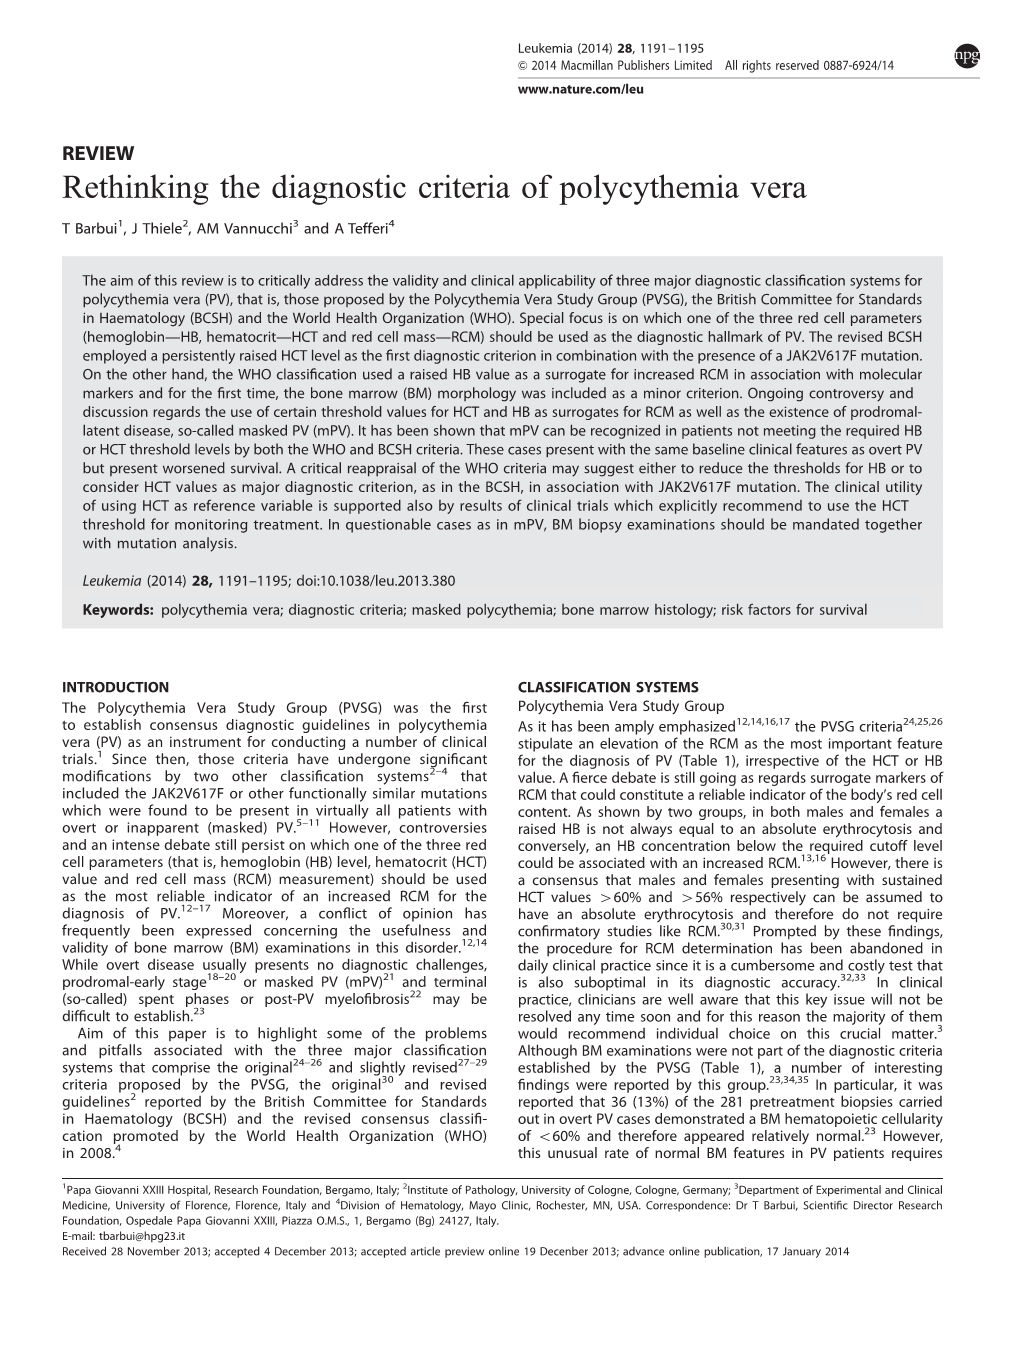 Rethinking the Diagnostic Criteria of Polycythemia Vera